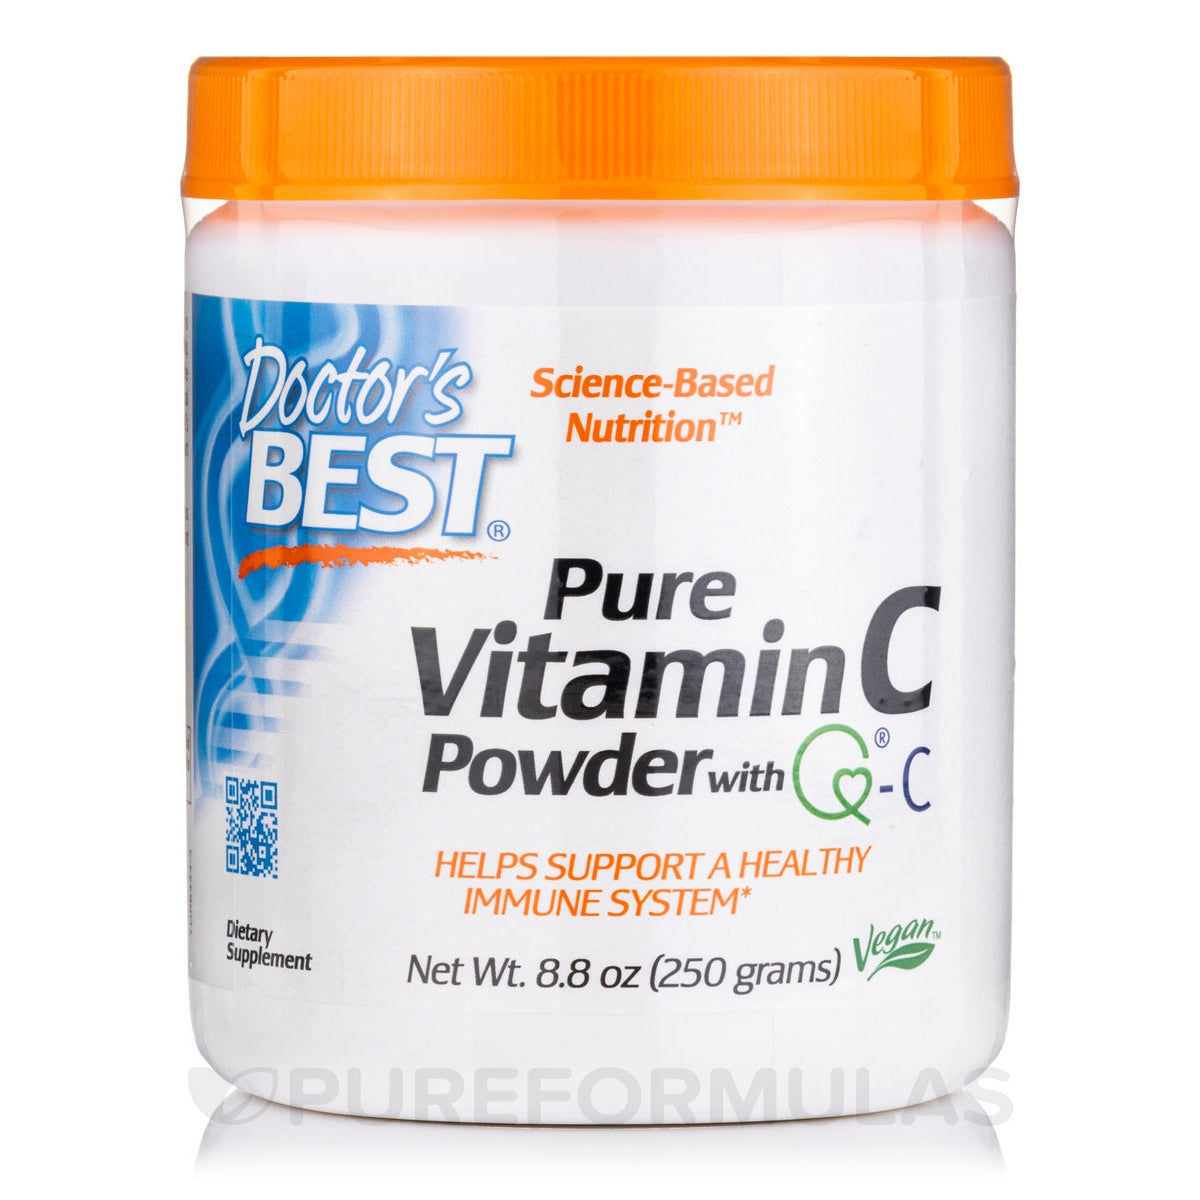 Pure Vitamin C powder (250g) - Doctor's Best